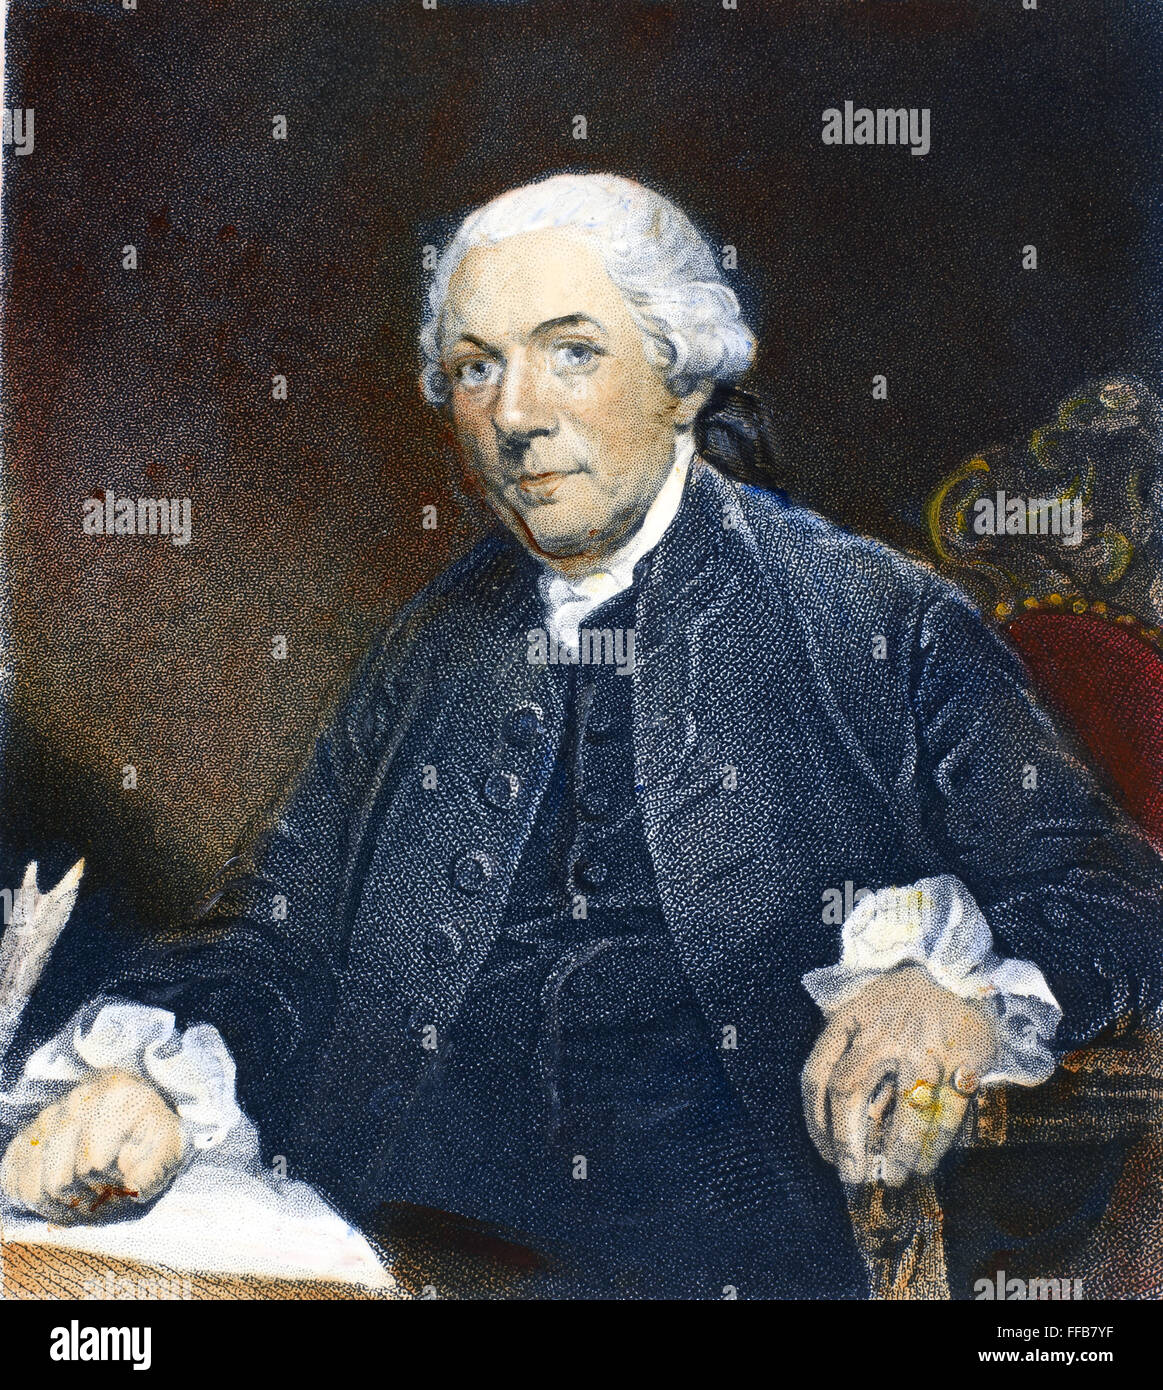 HENRY LAURENS (1724-1792). /nAmerican Revolutionary statesman. Stipple engraving, 19th century. Stock Photo